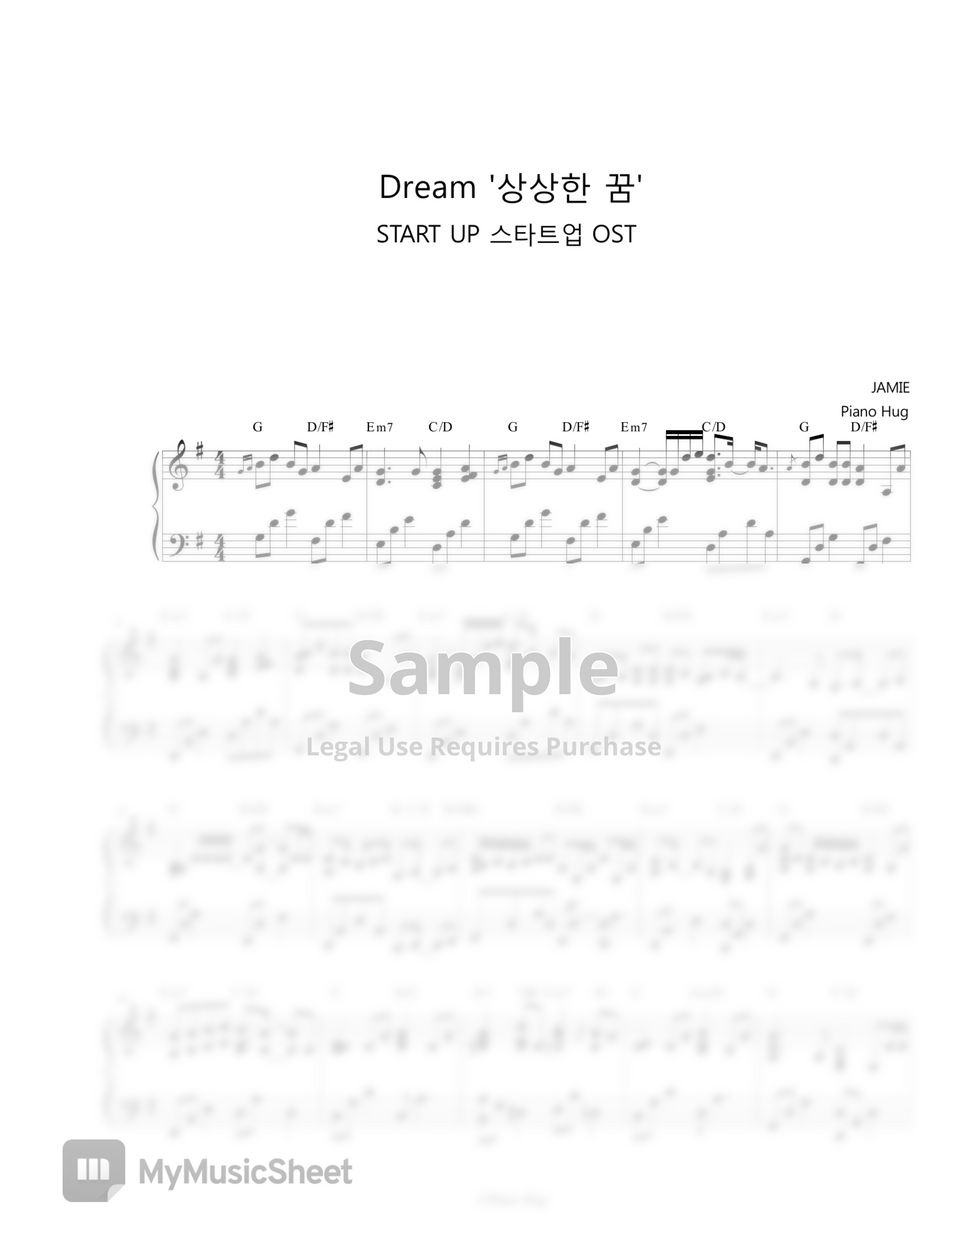 JAMIE (제이미) - Dream '상상한 꿈' (START UP OST) by Piano Hug